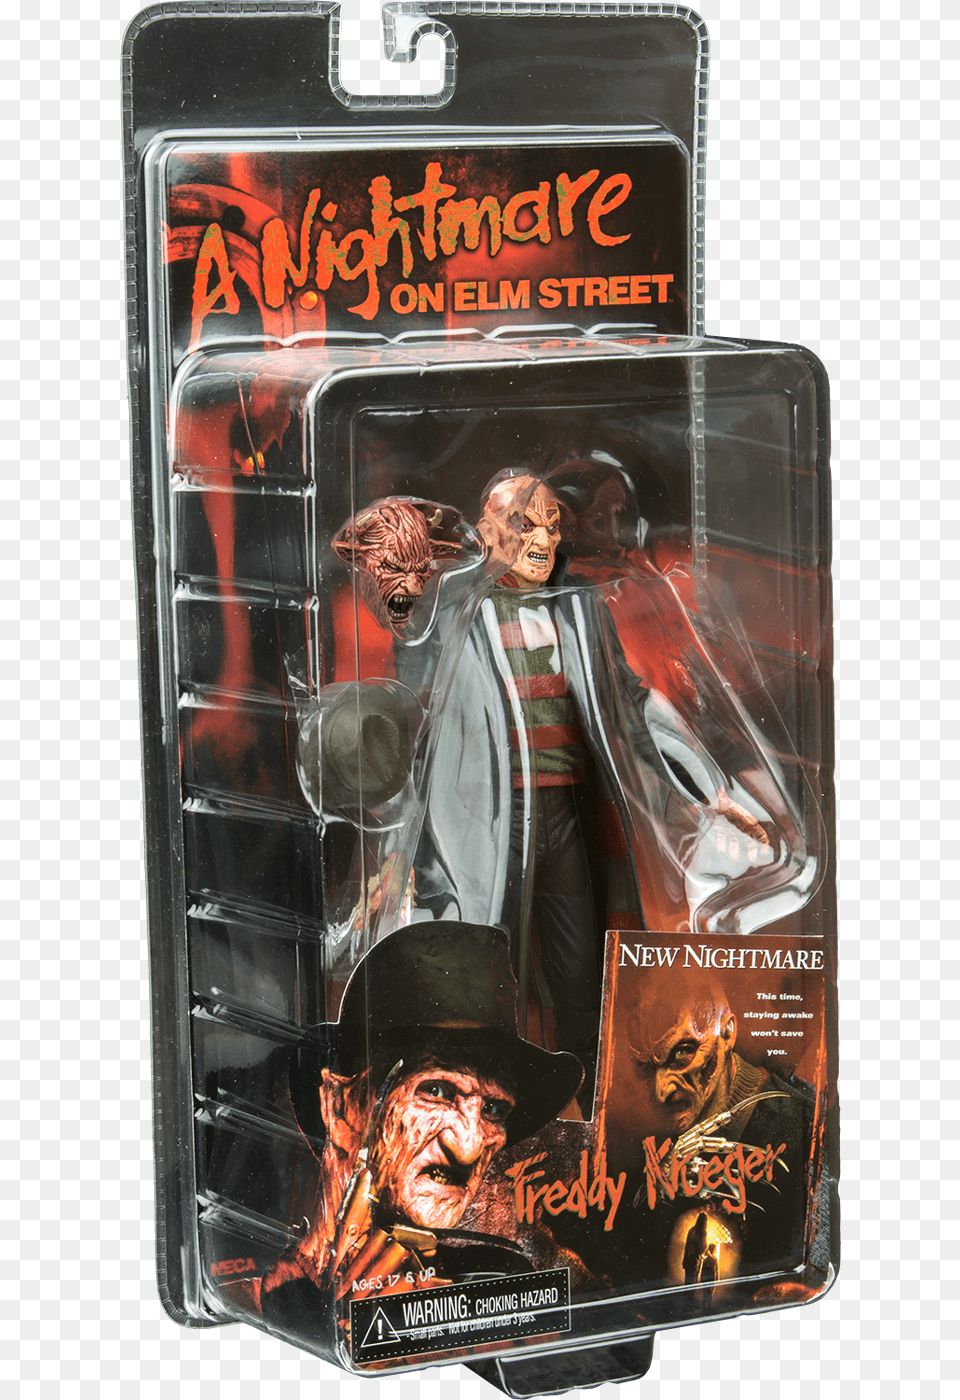 New Nightmare Freddy Krueger Nightmare On Elm Street, Adult, Book, Comics, Publication Png